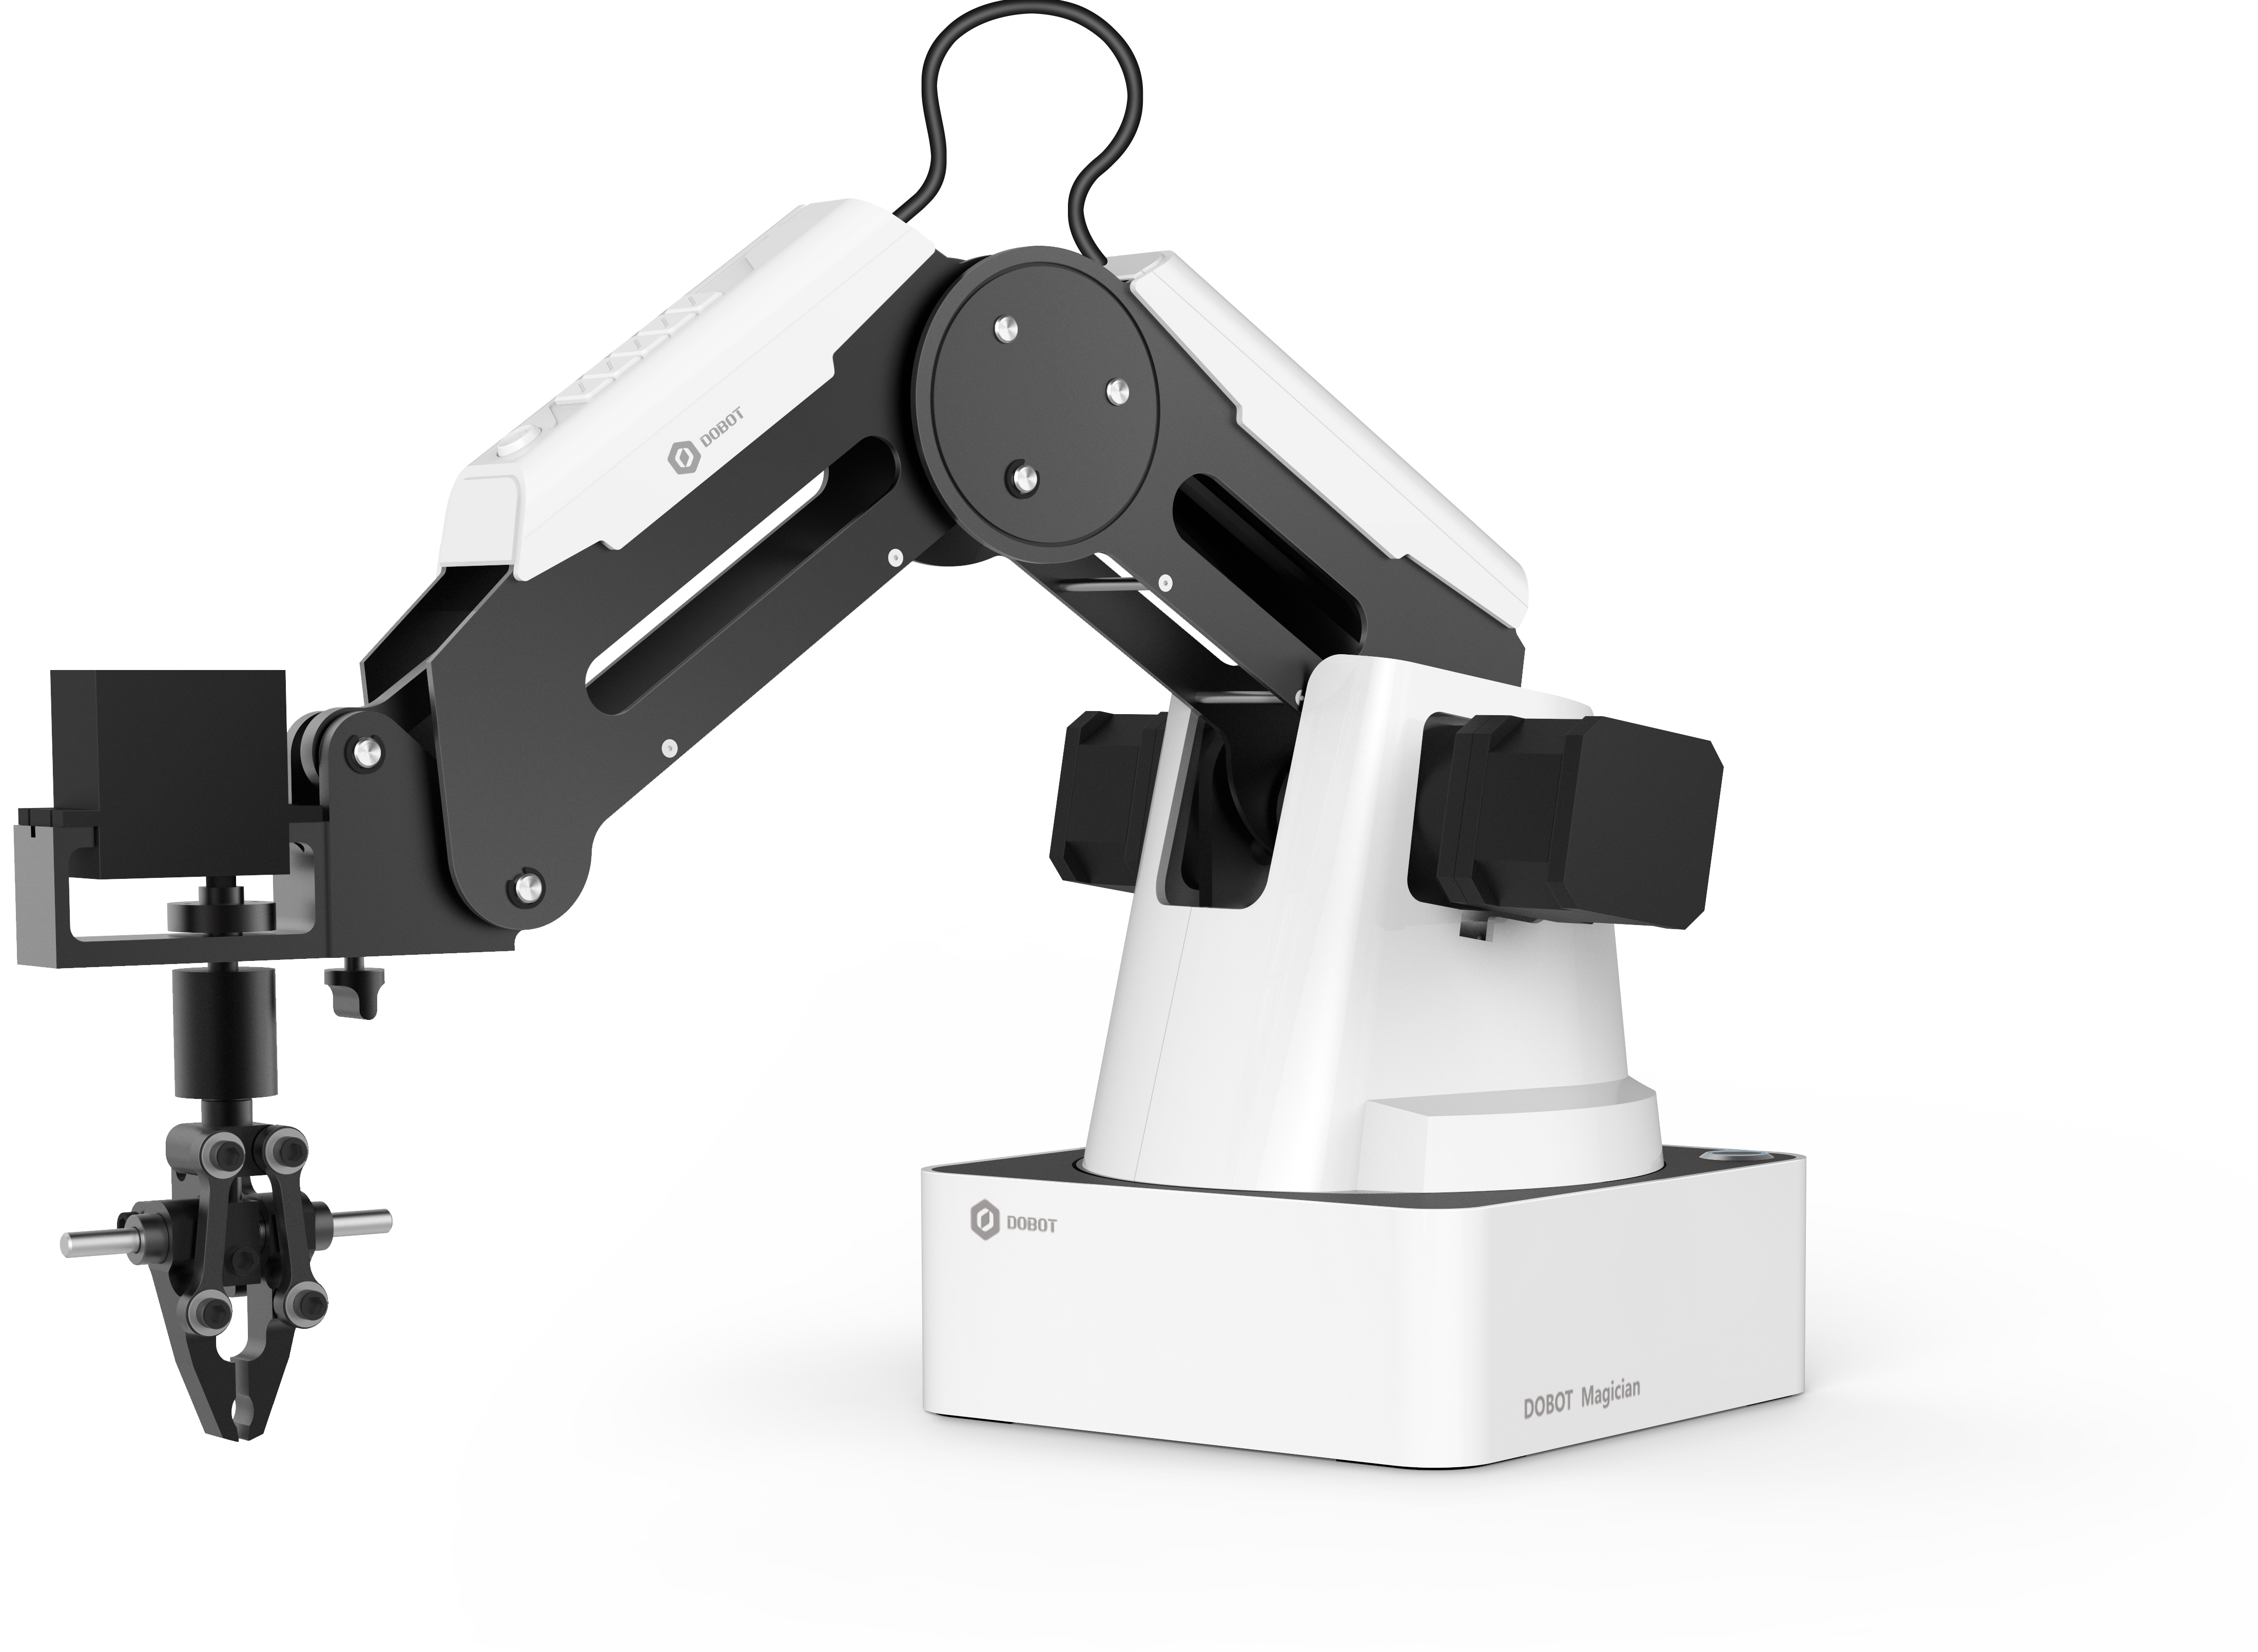 RobotLAB Dobot Robotic Arm